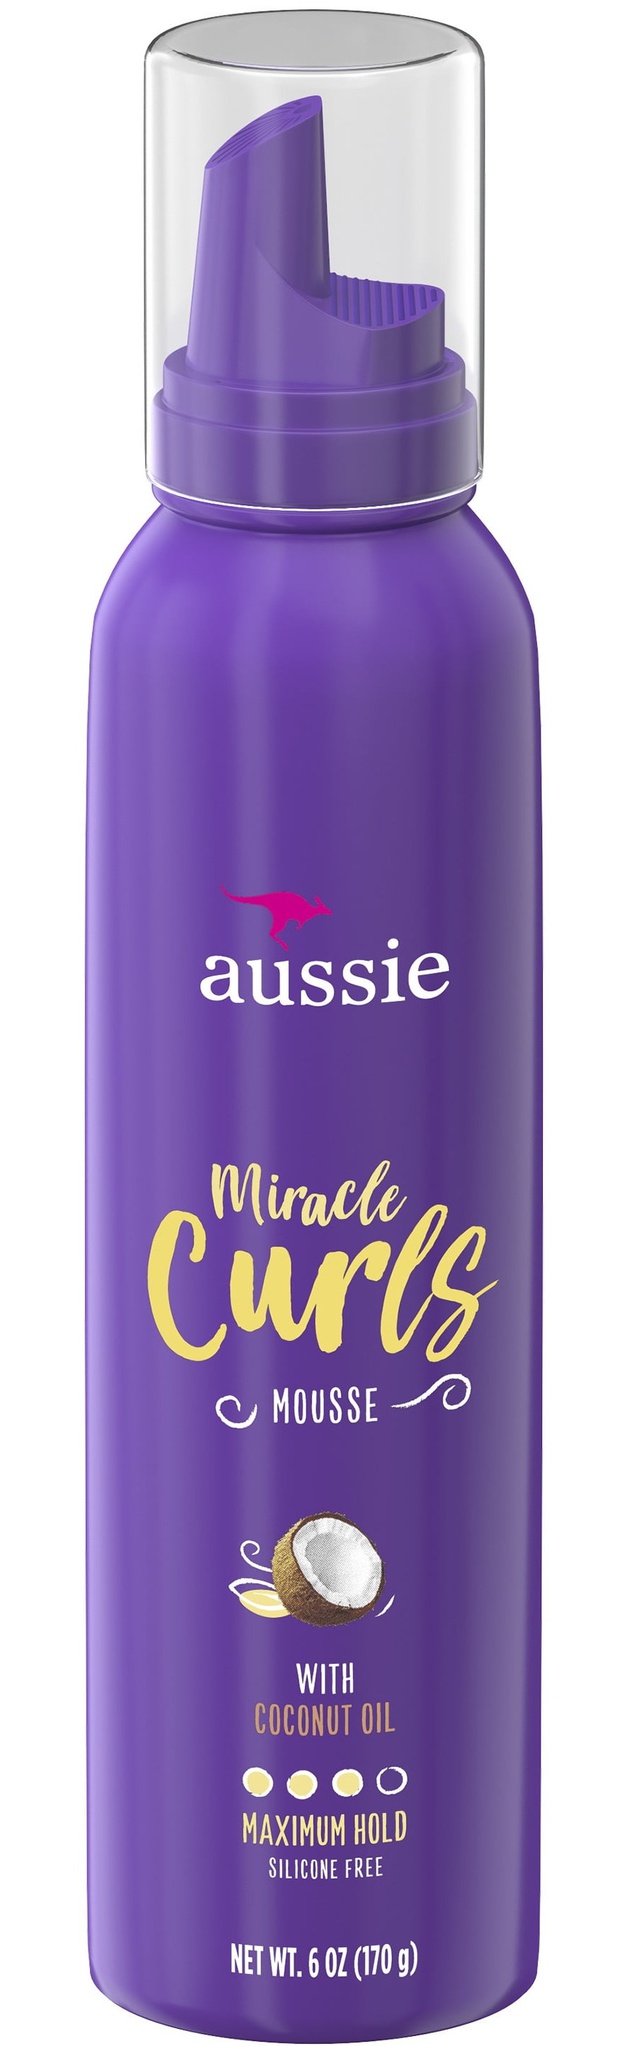 Aussie Miracle Curls Mousse